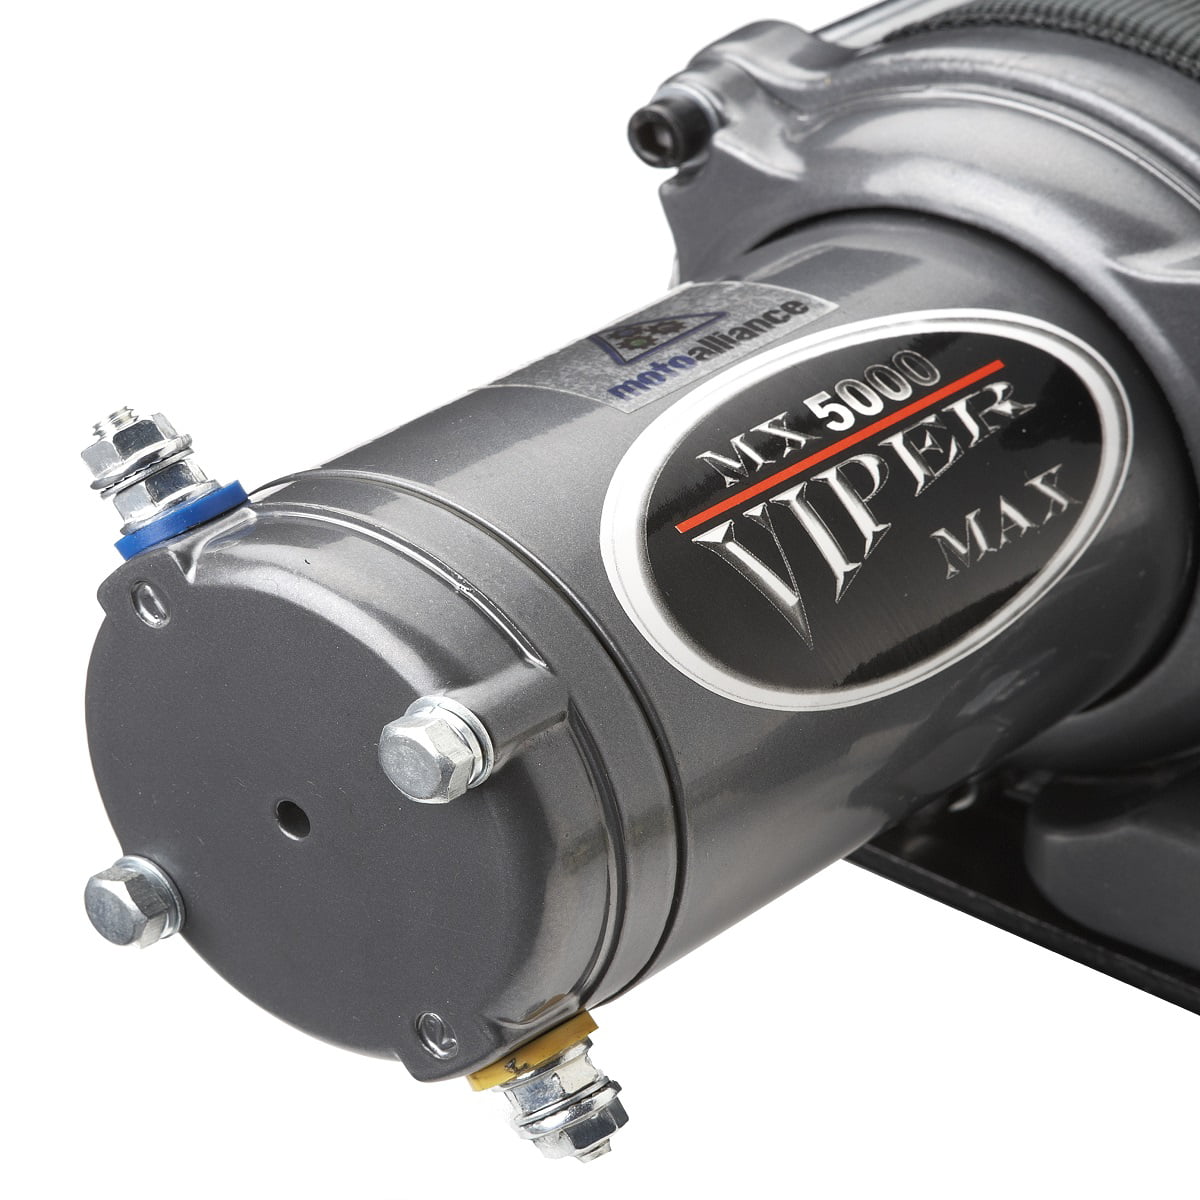 VIPER Max 5000lb ATV/UTV Winch Kit with 50 feet Steel Cable